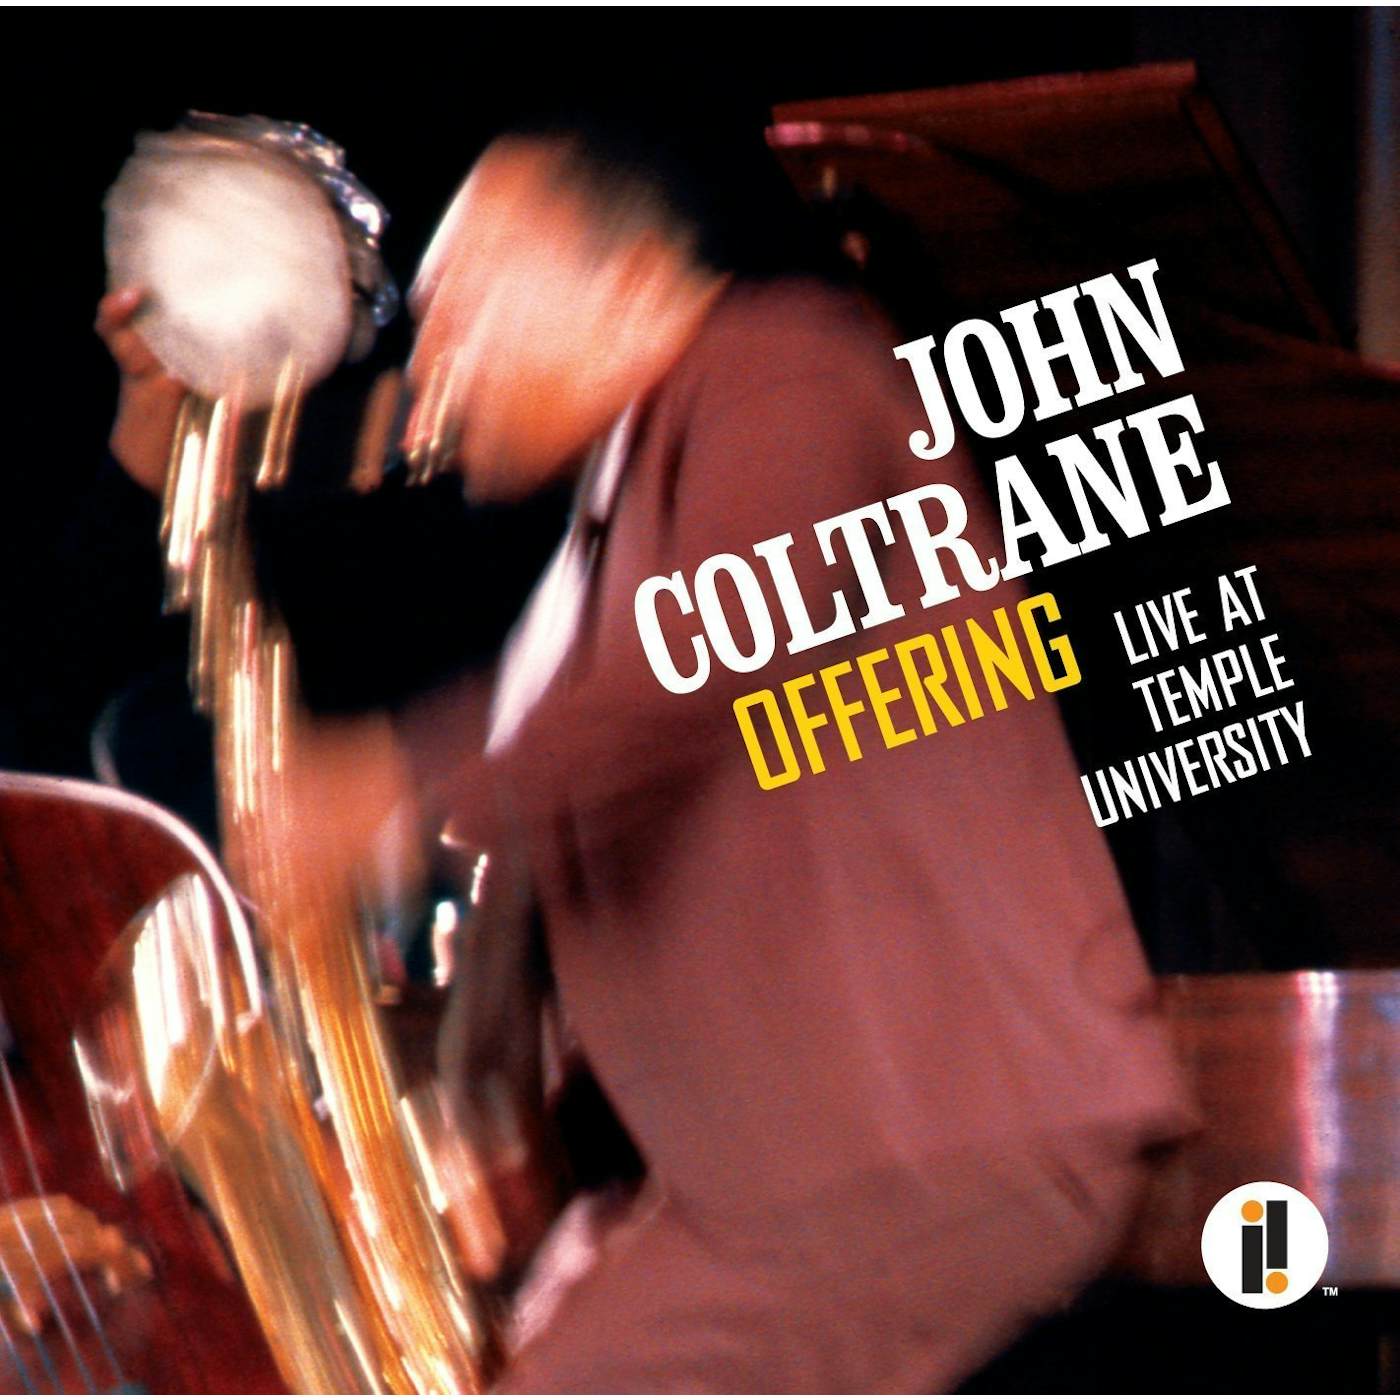 John Coltrane Offering: Live At Temple University Vinyl Record